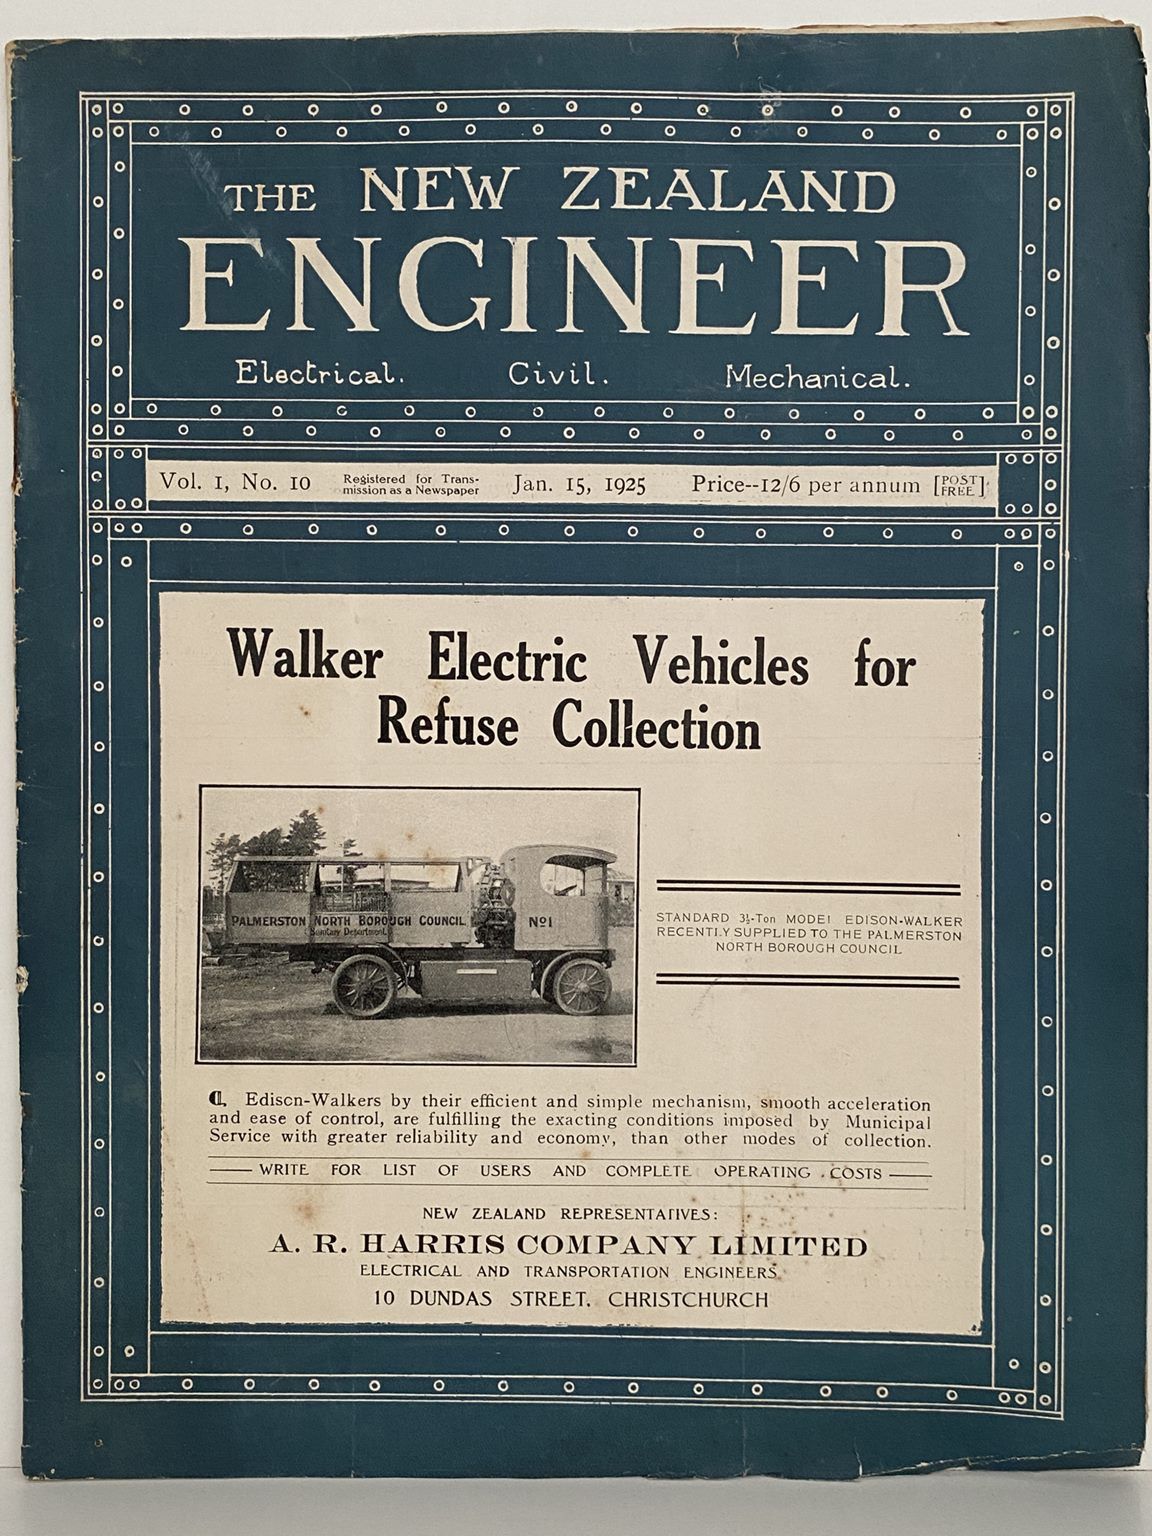 OLD MAGAZINE: The New Zealand Engineer Vol. 1, No. 10 - 15 January 1925